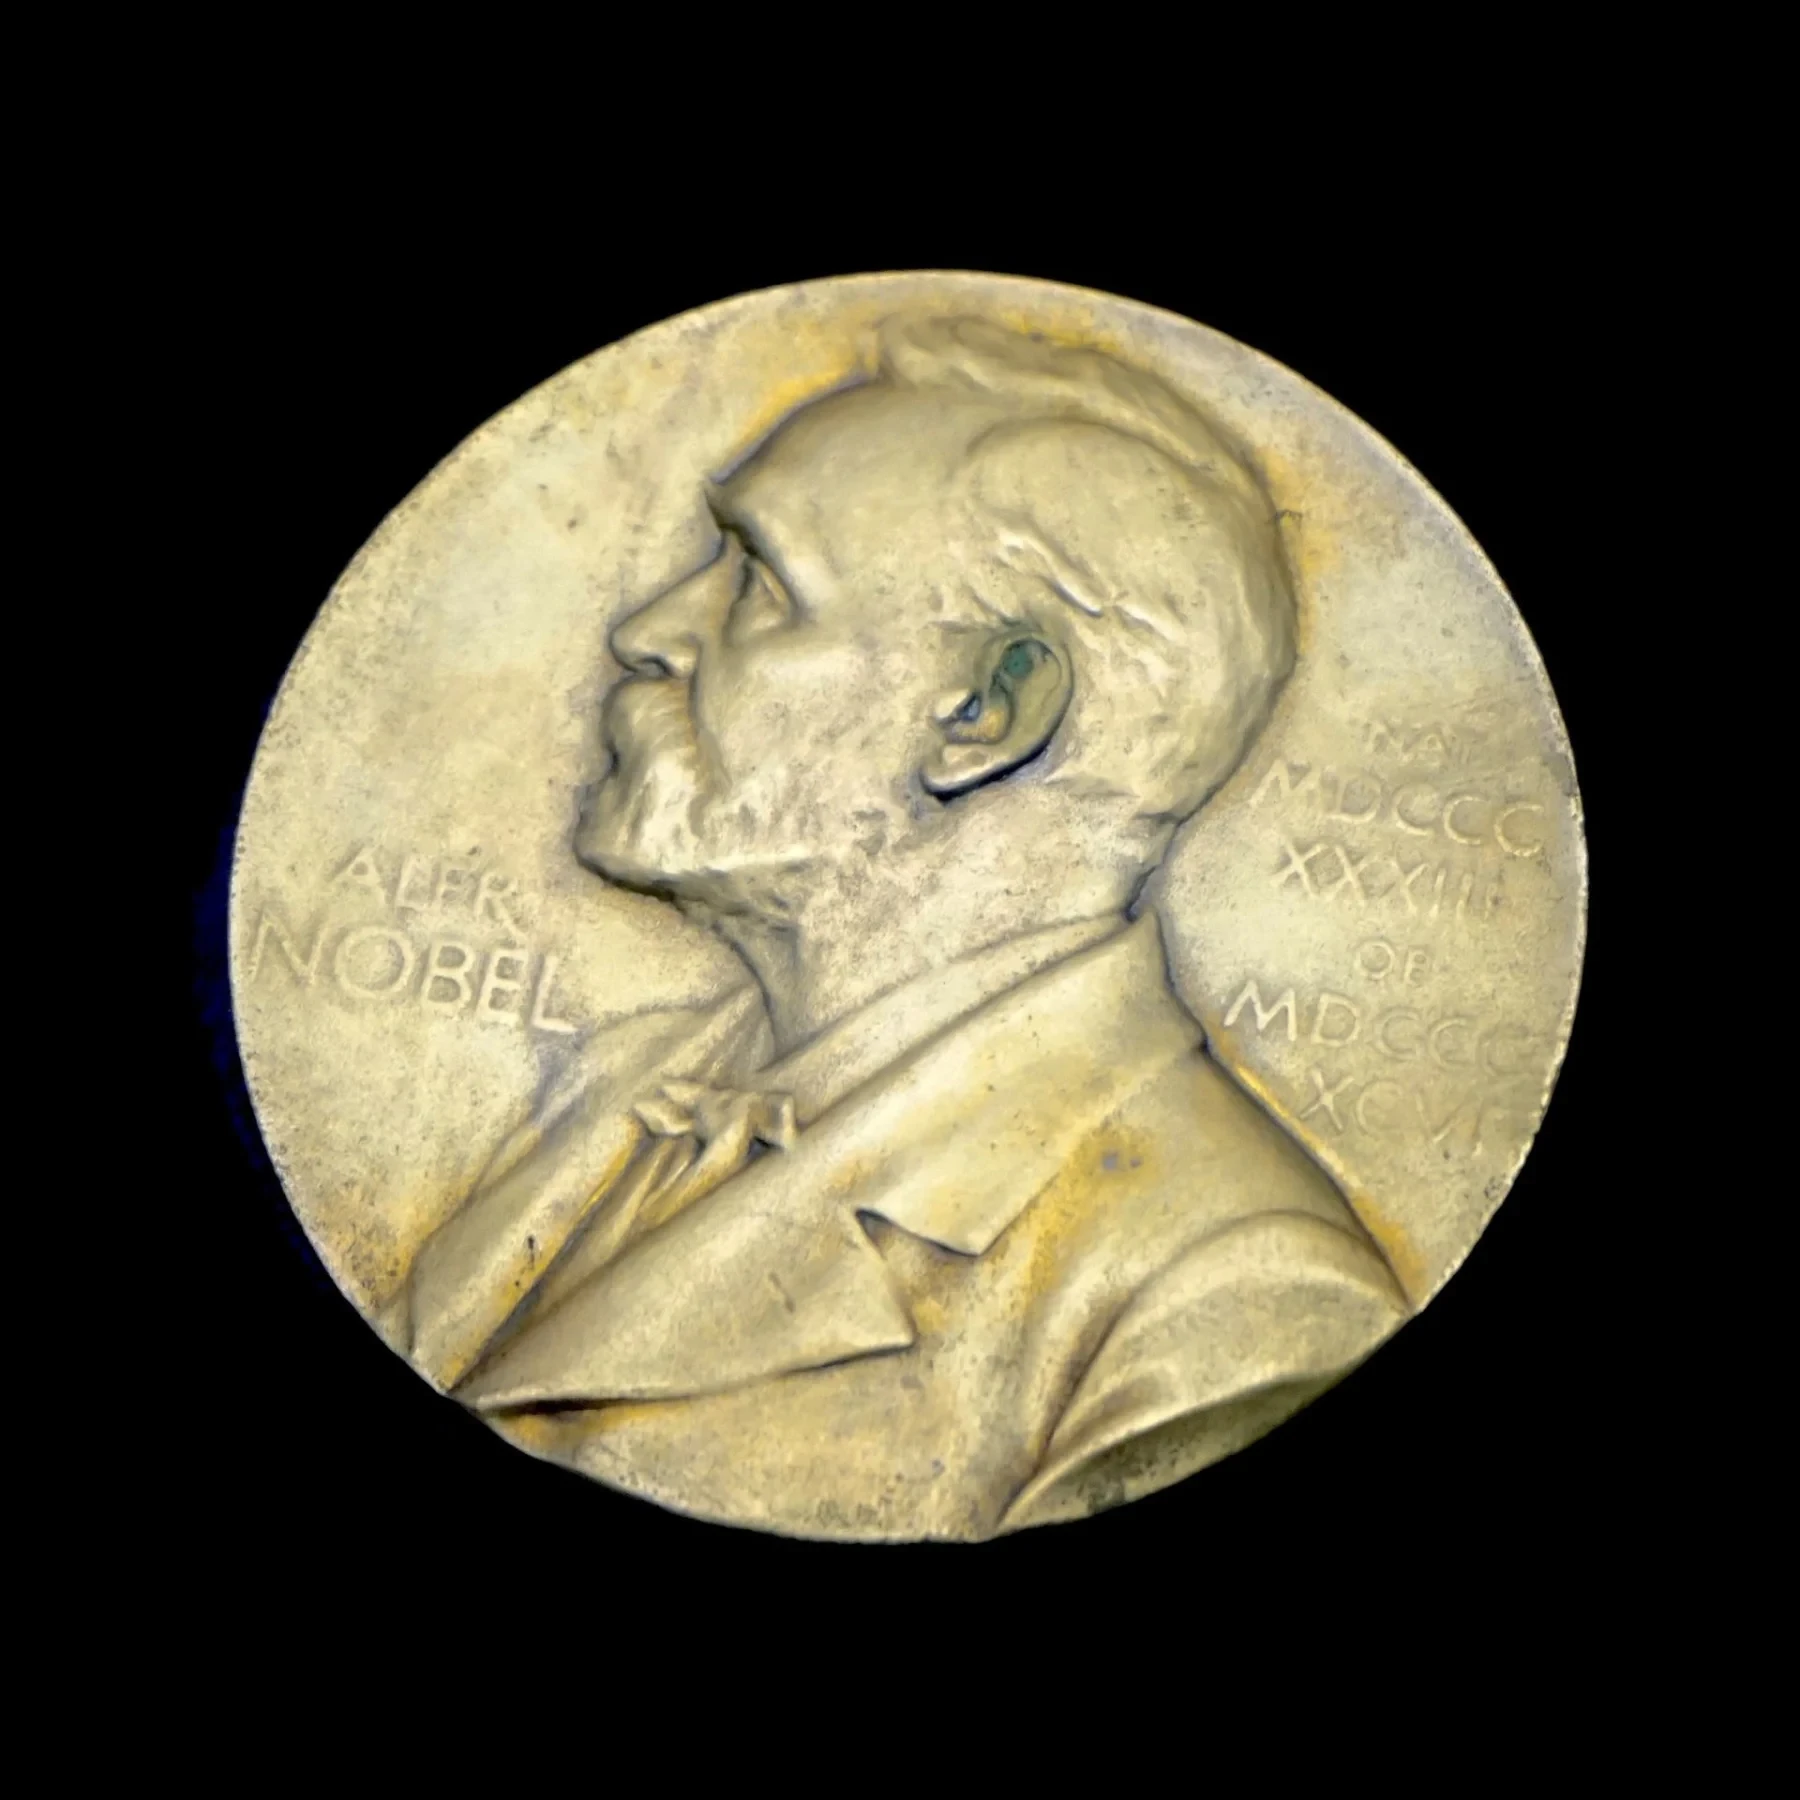 23 carat gold Nobel Prize Coin